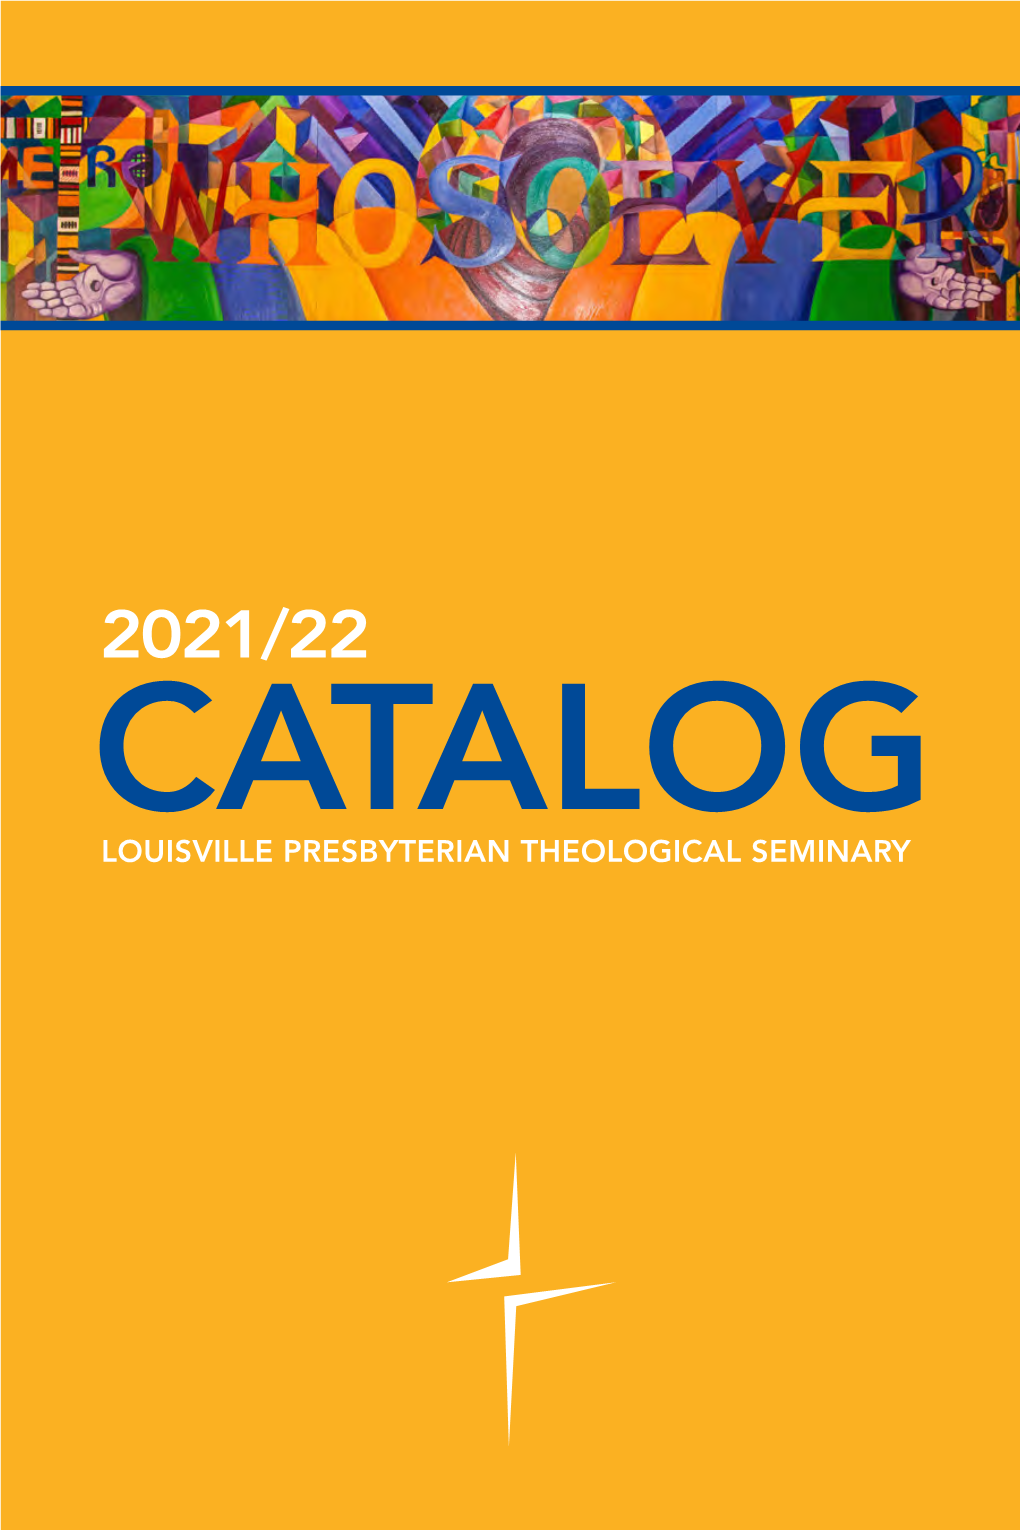 LOUISVILLE PRESBYTERIAN THEOLOGICAL SEMINARY the Louisville Seminary Catalog